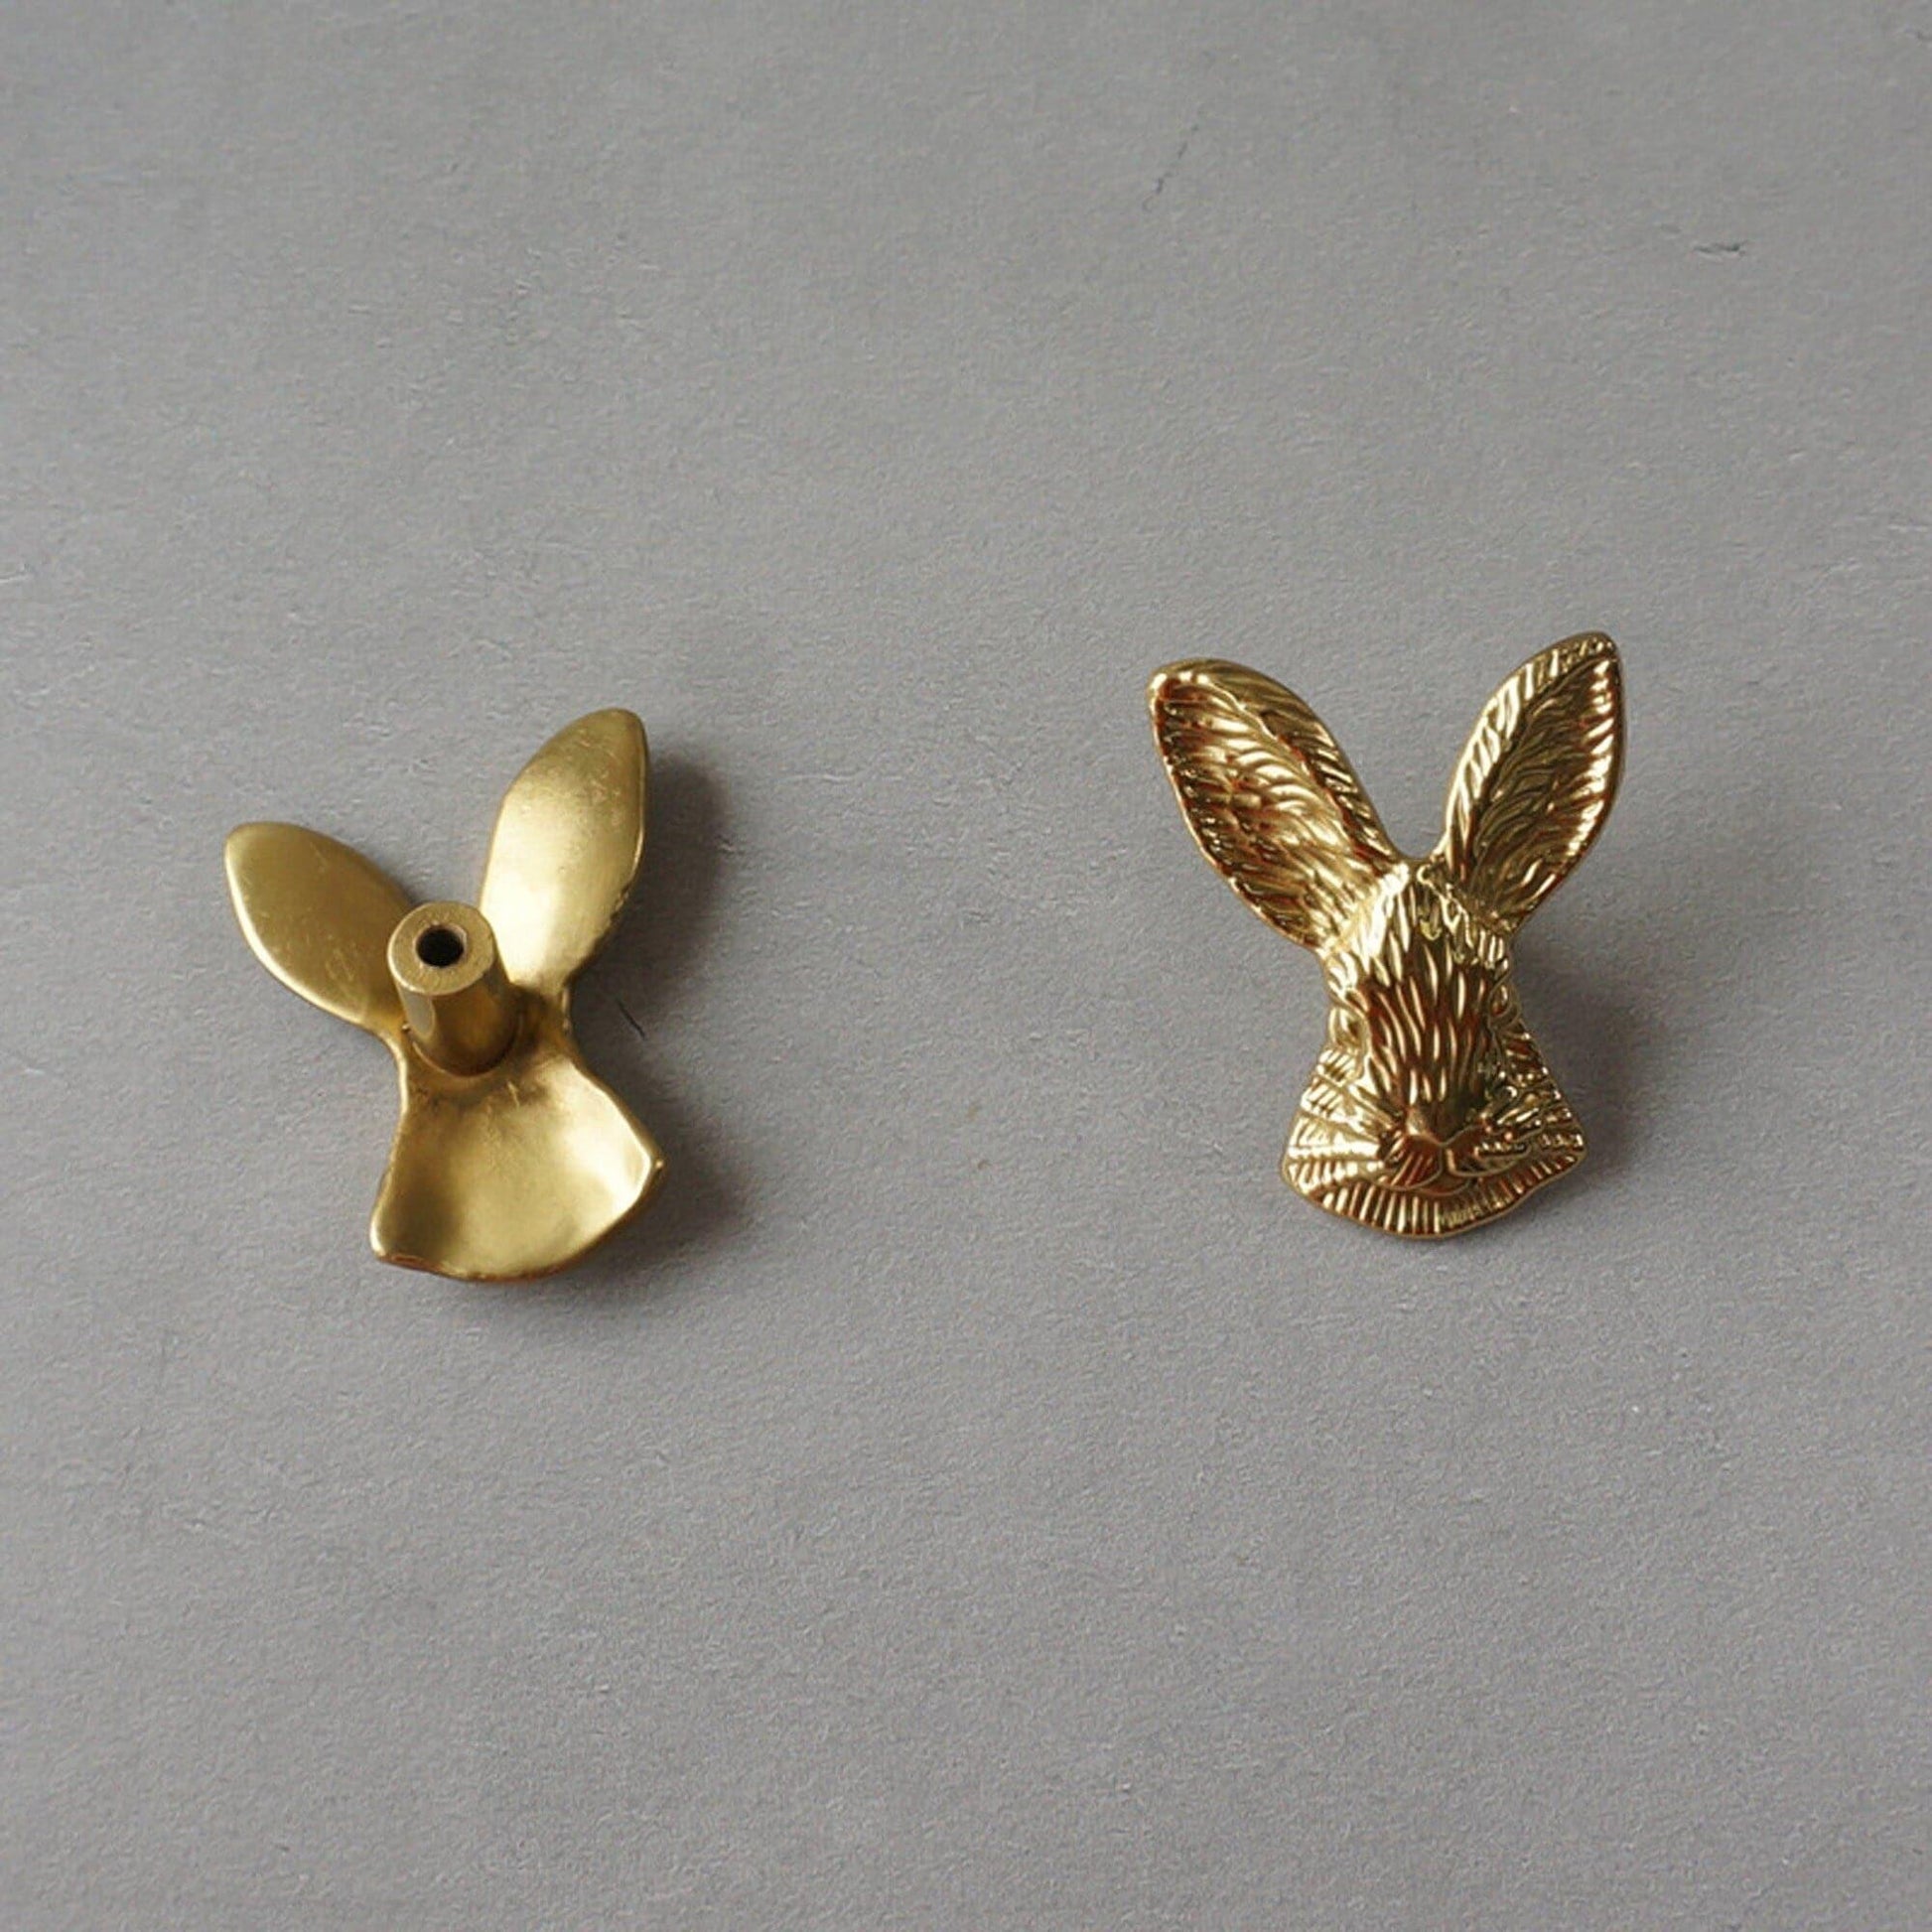 Antique Brass Knobs - Animal Inspired Rabbit Design - Iron Drawer